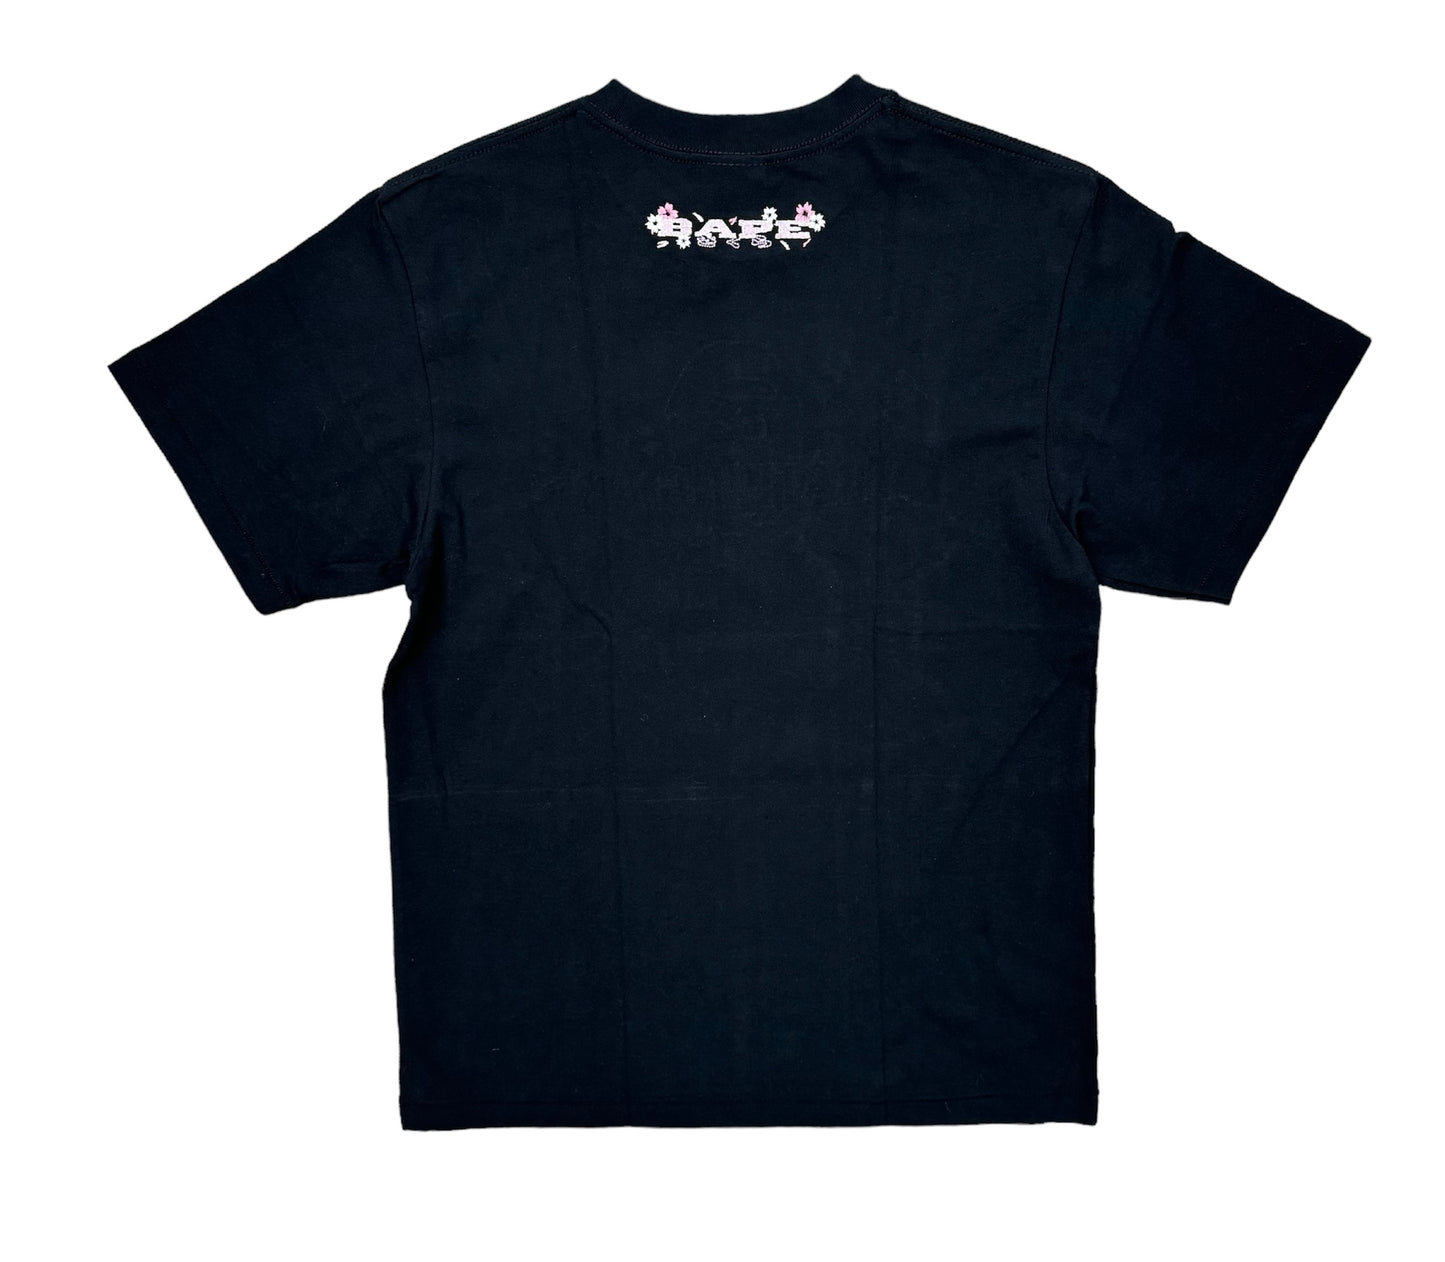 A Bathing Ape Bape “Sakura Bape” Black T-Shirt